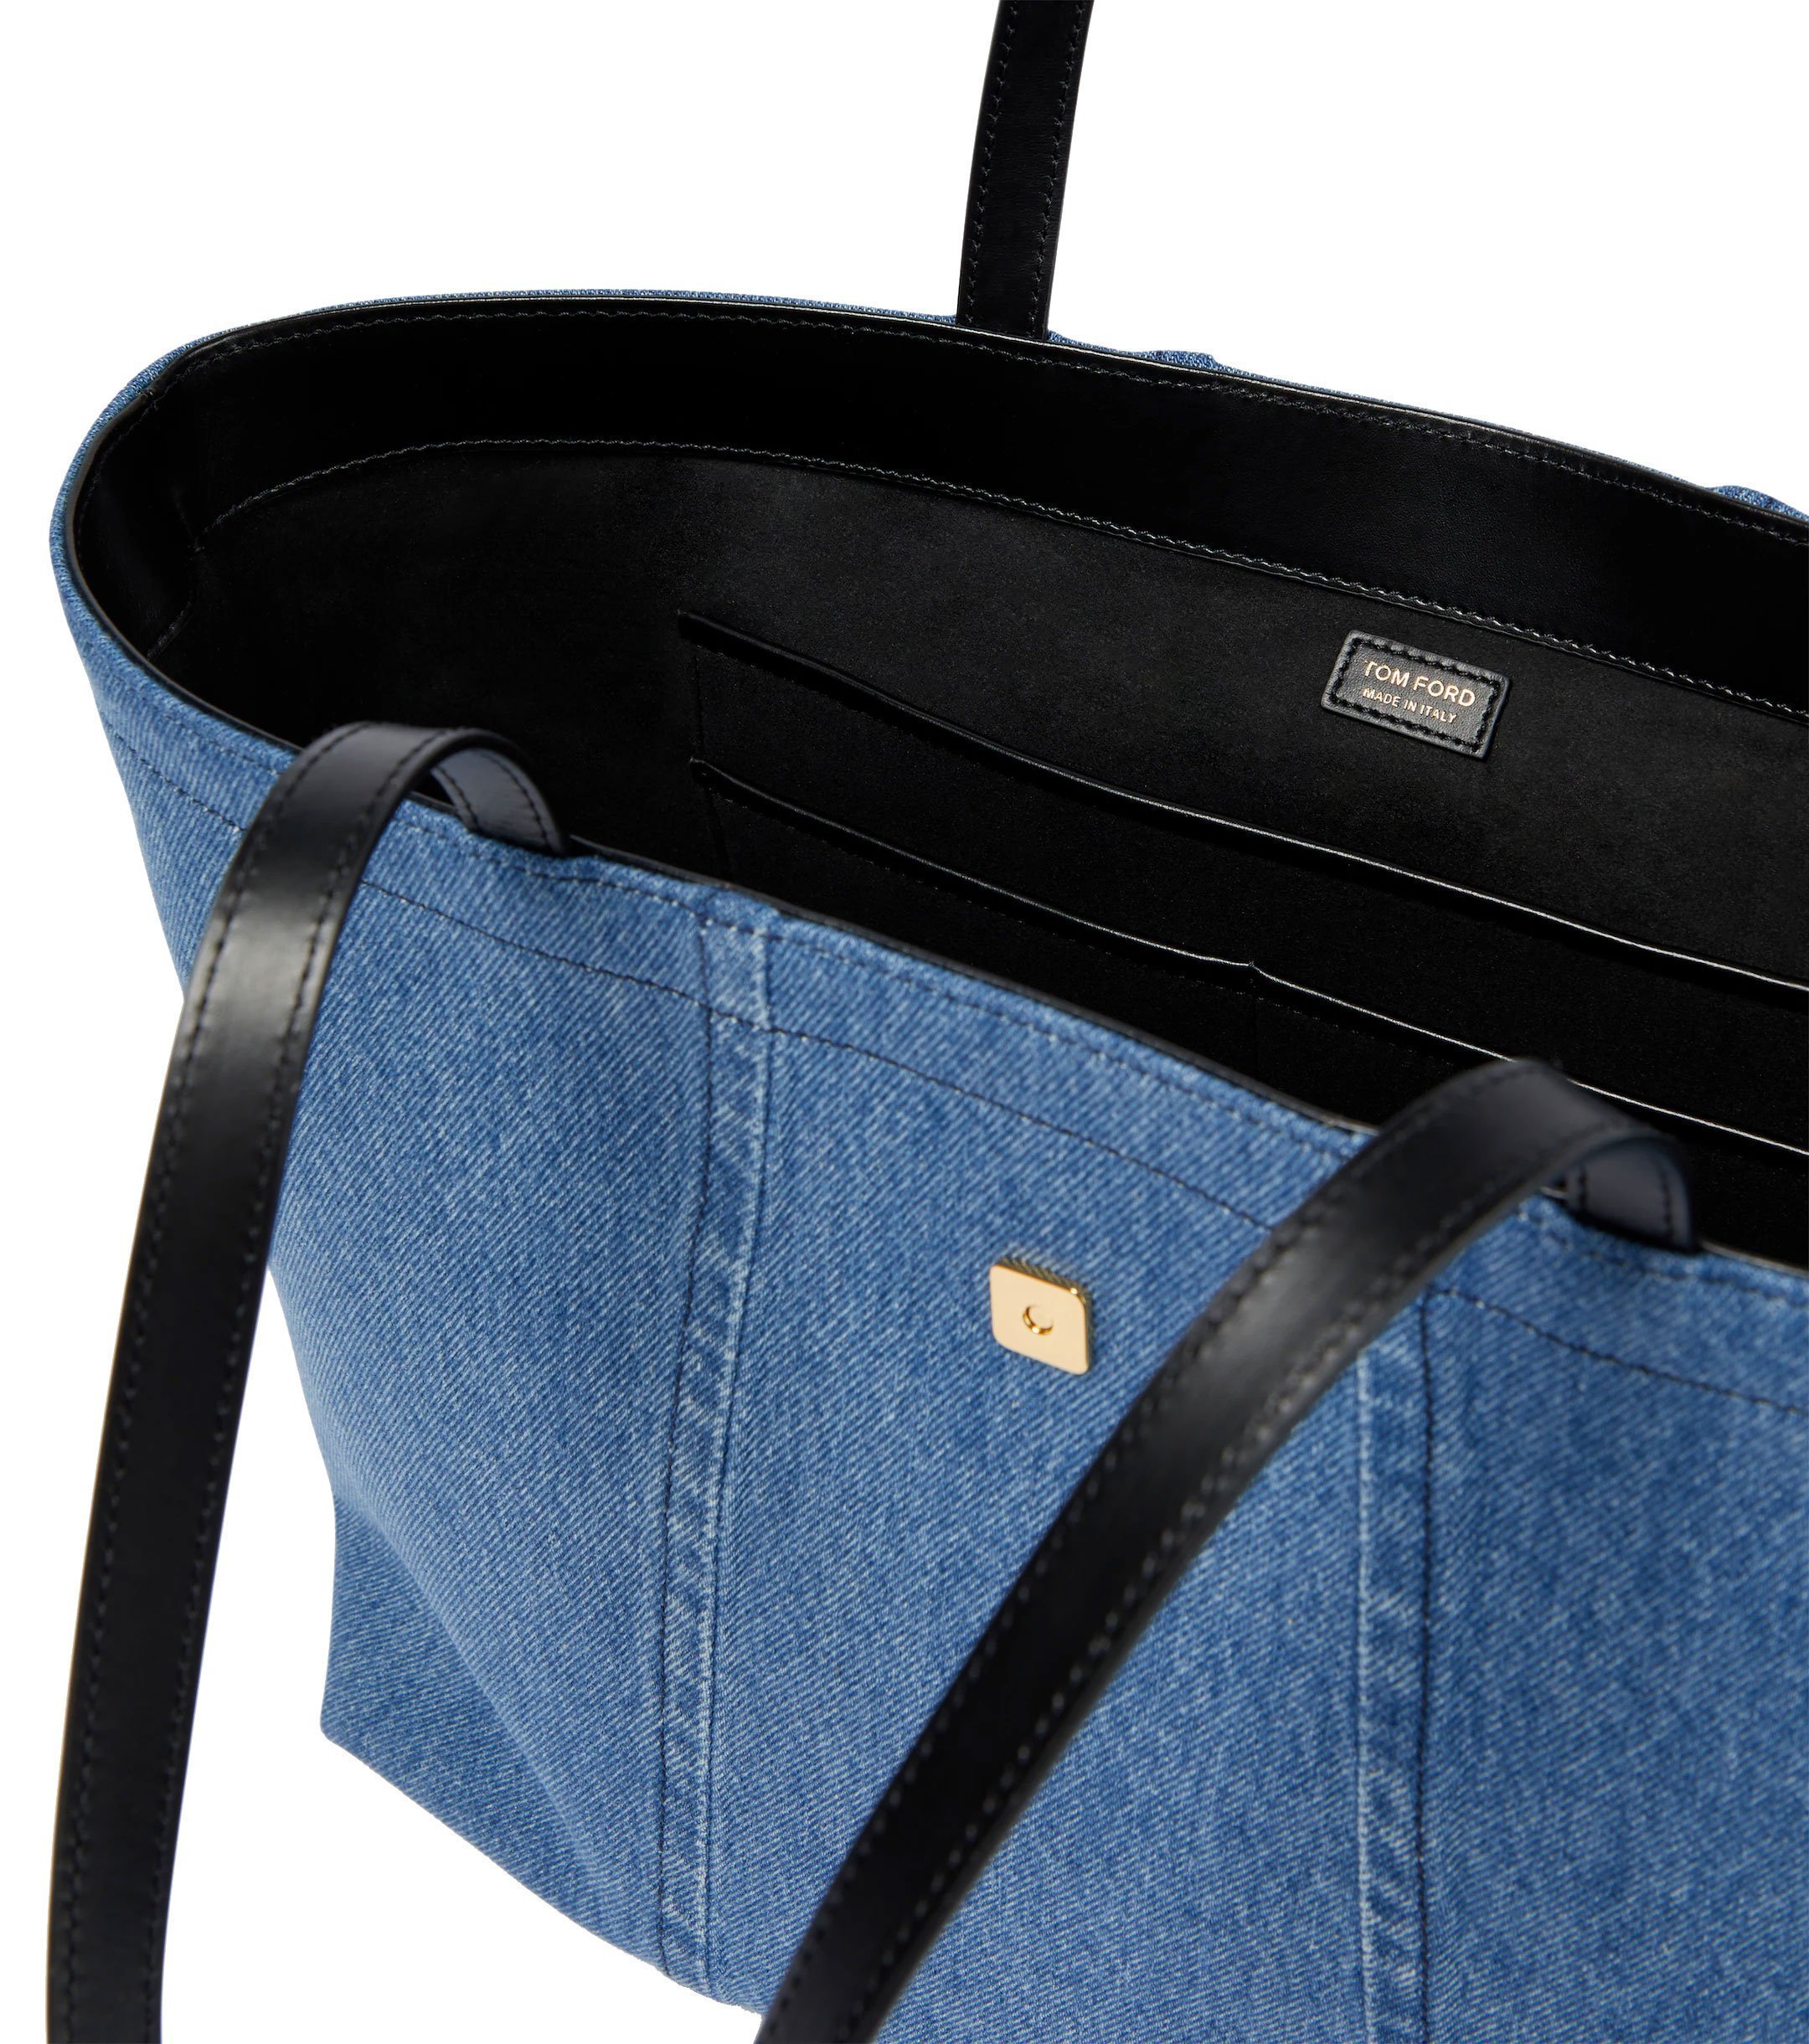 Bag TOM FORD Color: blue (Code: 2976) in online store Allure